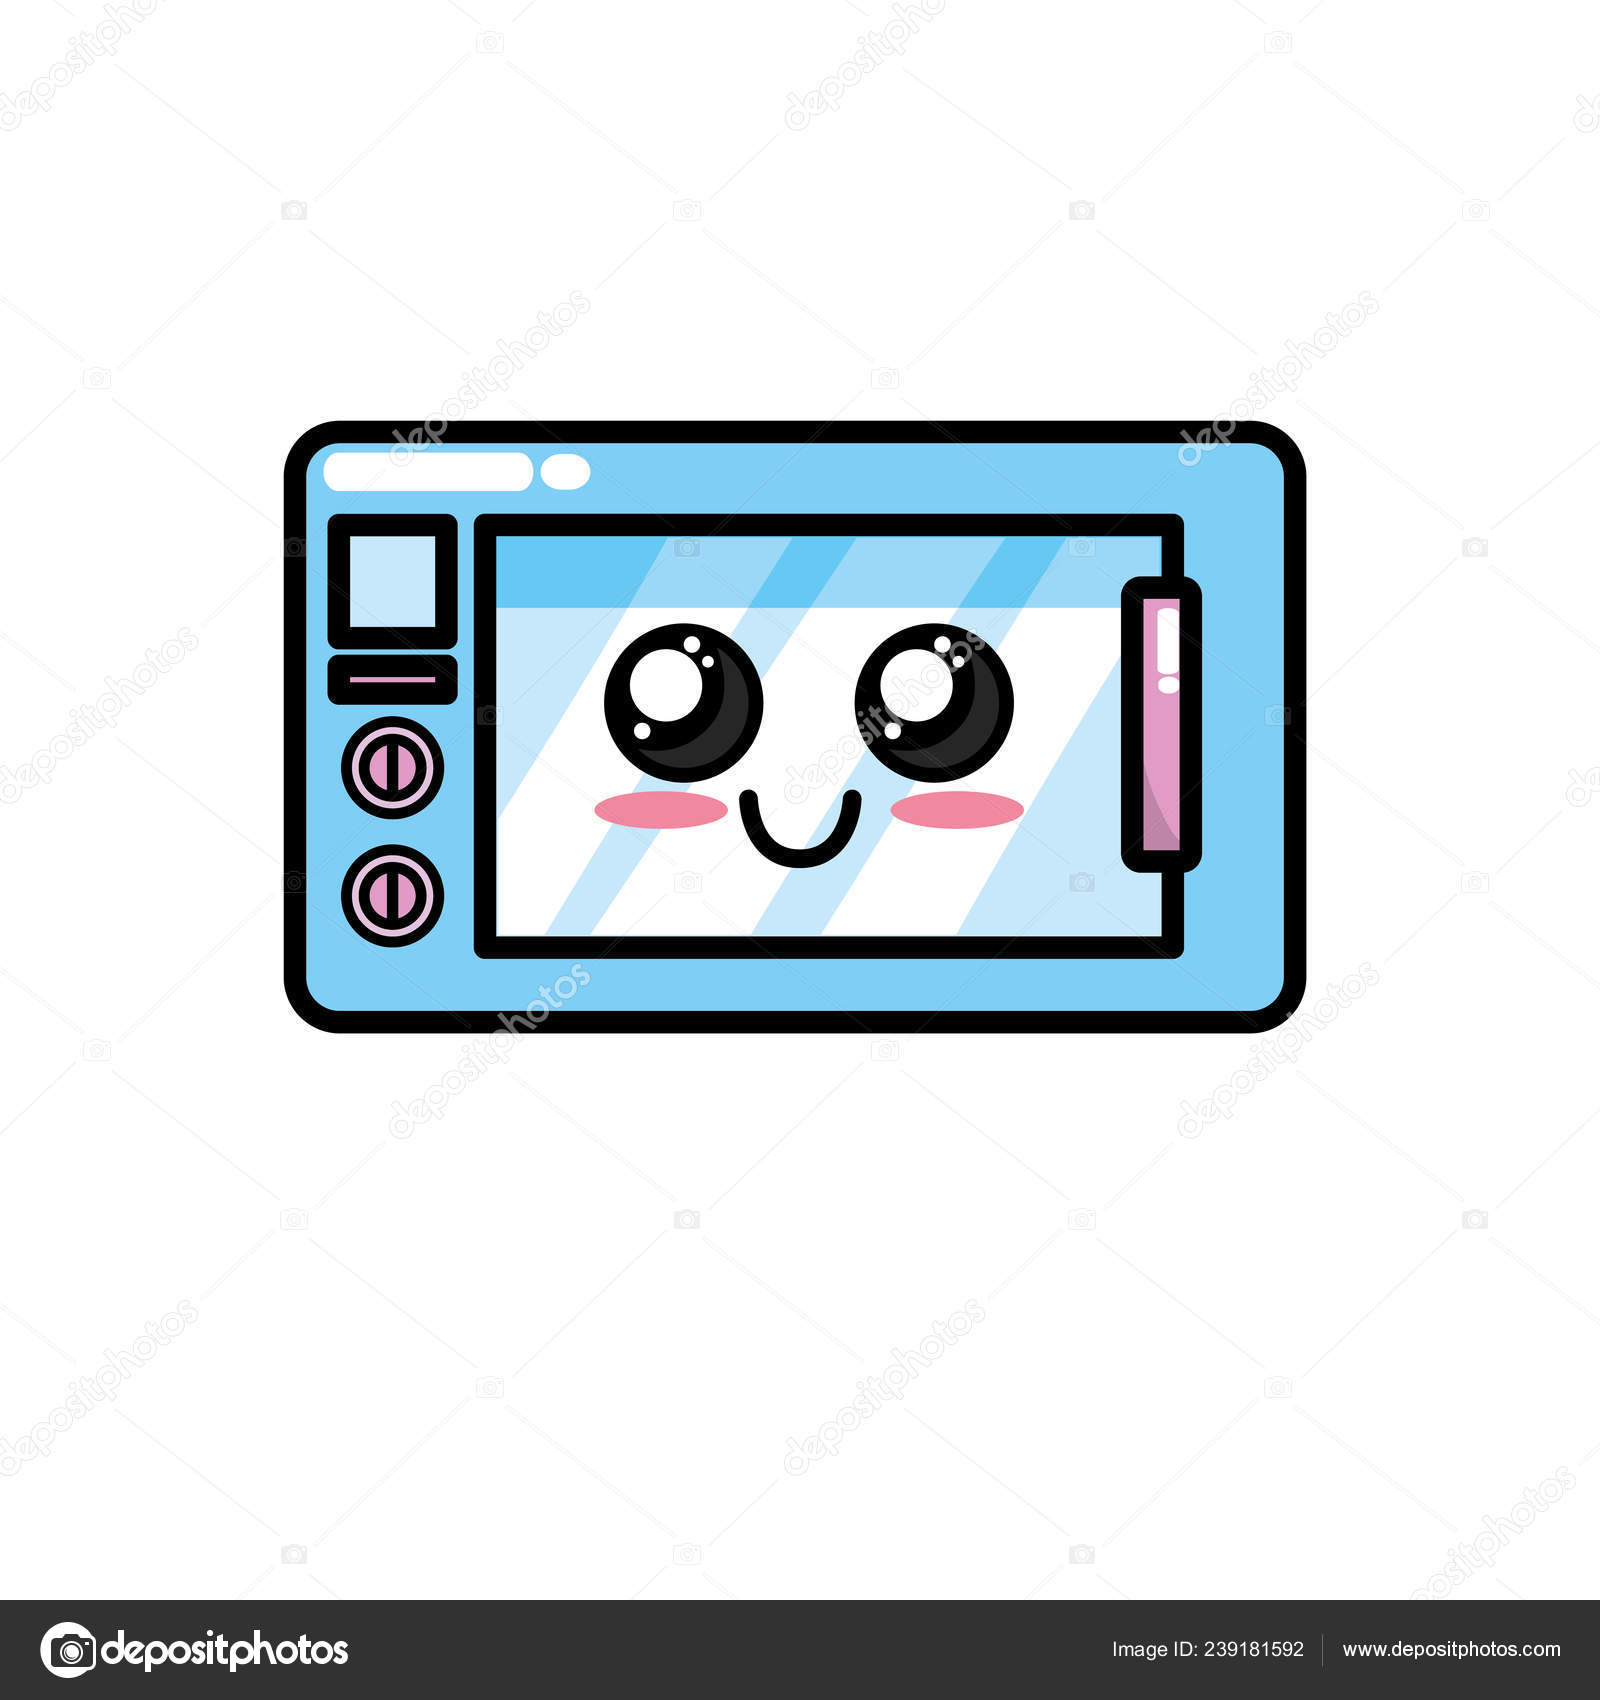 https://st4.depositphotos.com/11953928/23918/v/1600/depositphotos_239181592-stock-illustration-kawaii-cute-happy-microwaves-technology.jpg